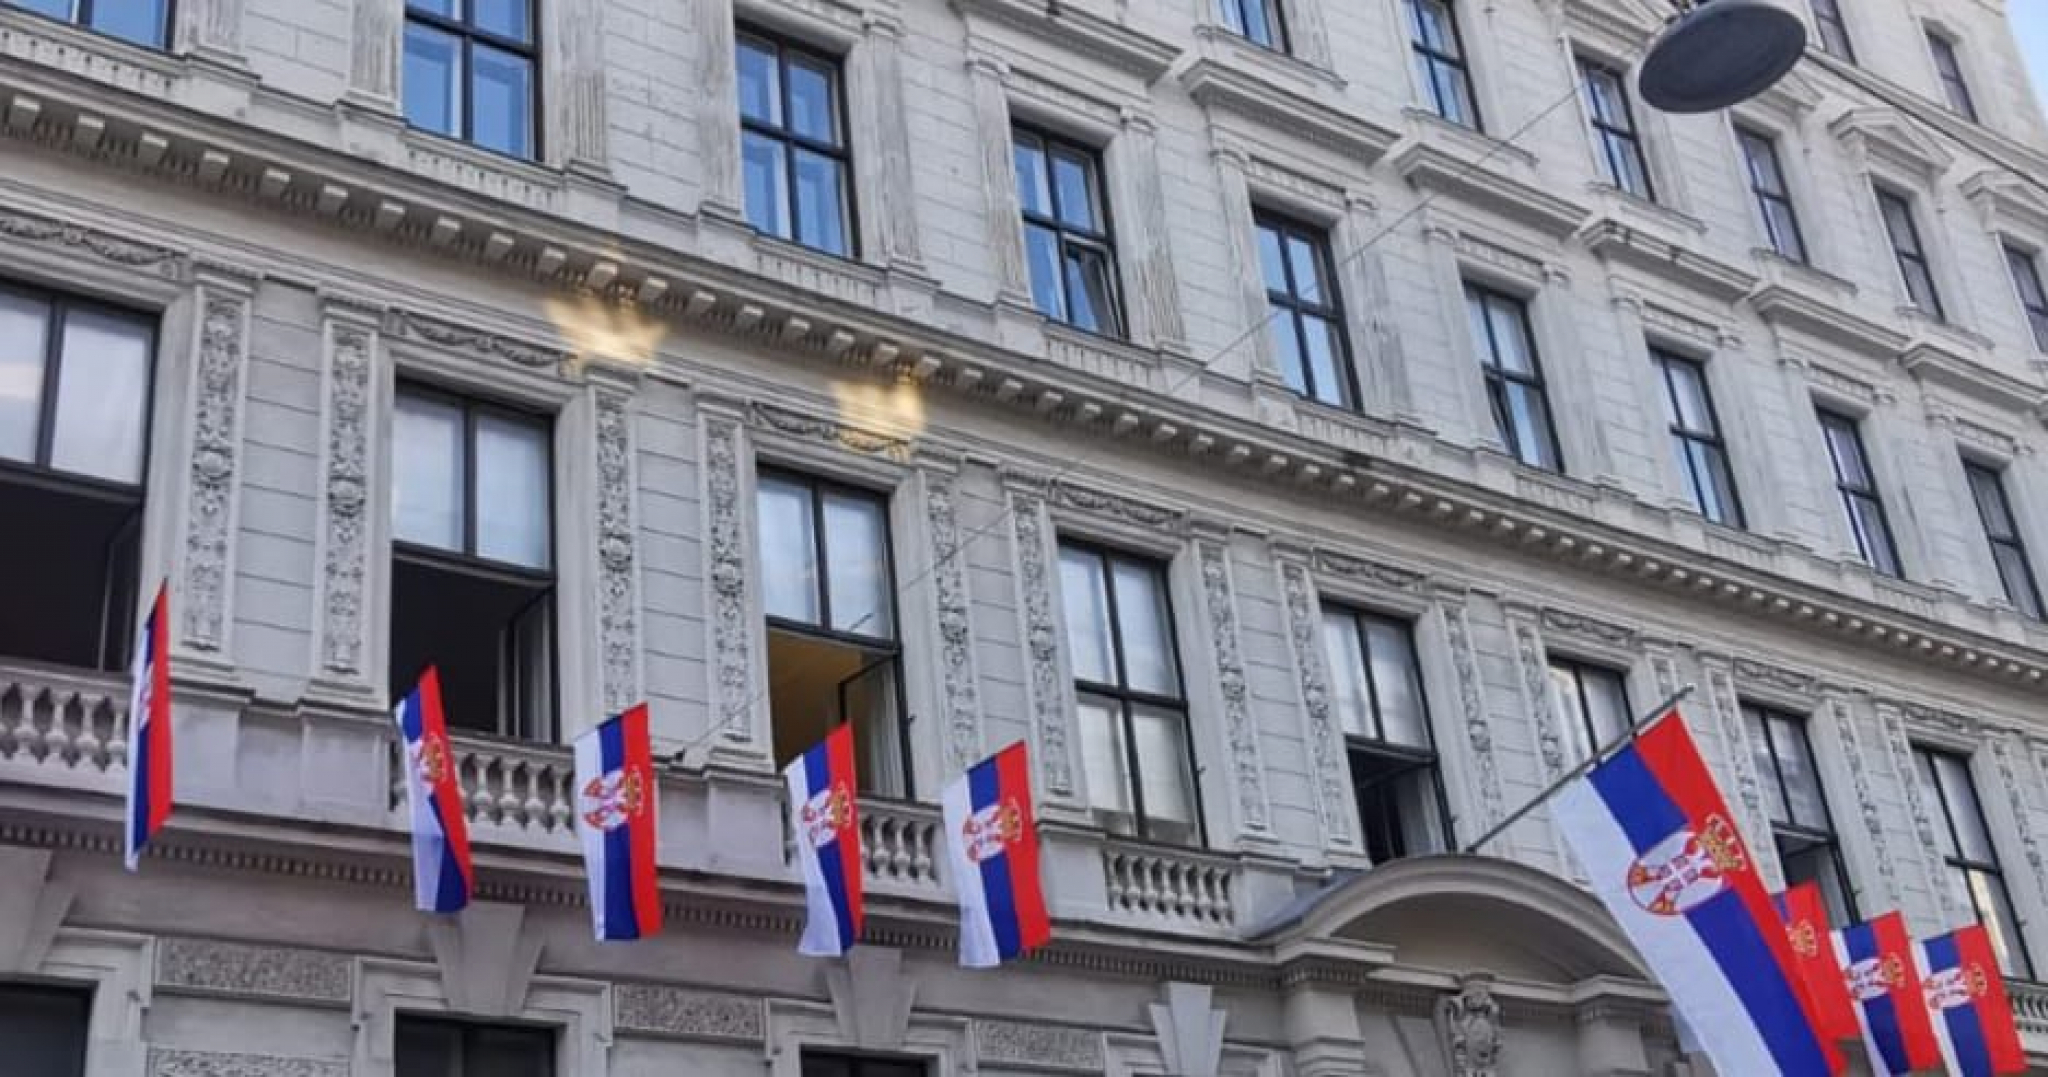 SRBIJA JE VASKRSLA! Srpske zastave se vijore na zgradi ambasade u Austriji (FOTO)